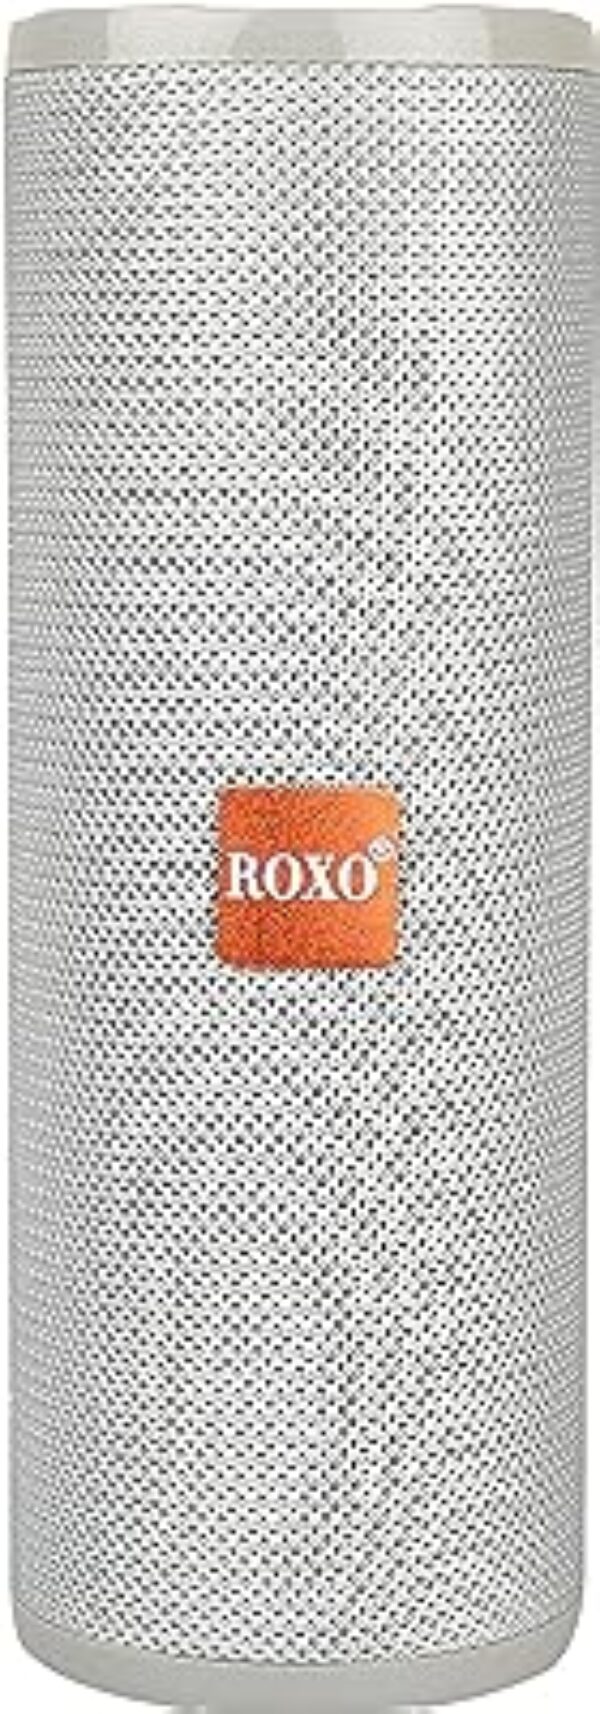 ROXO TG 149 Wireless Bluetooth Speaker (Grey)